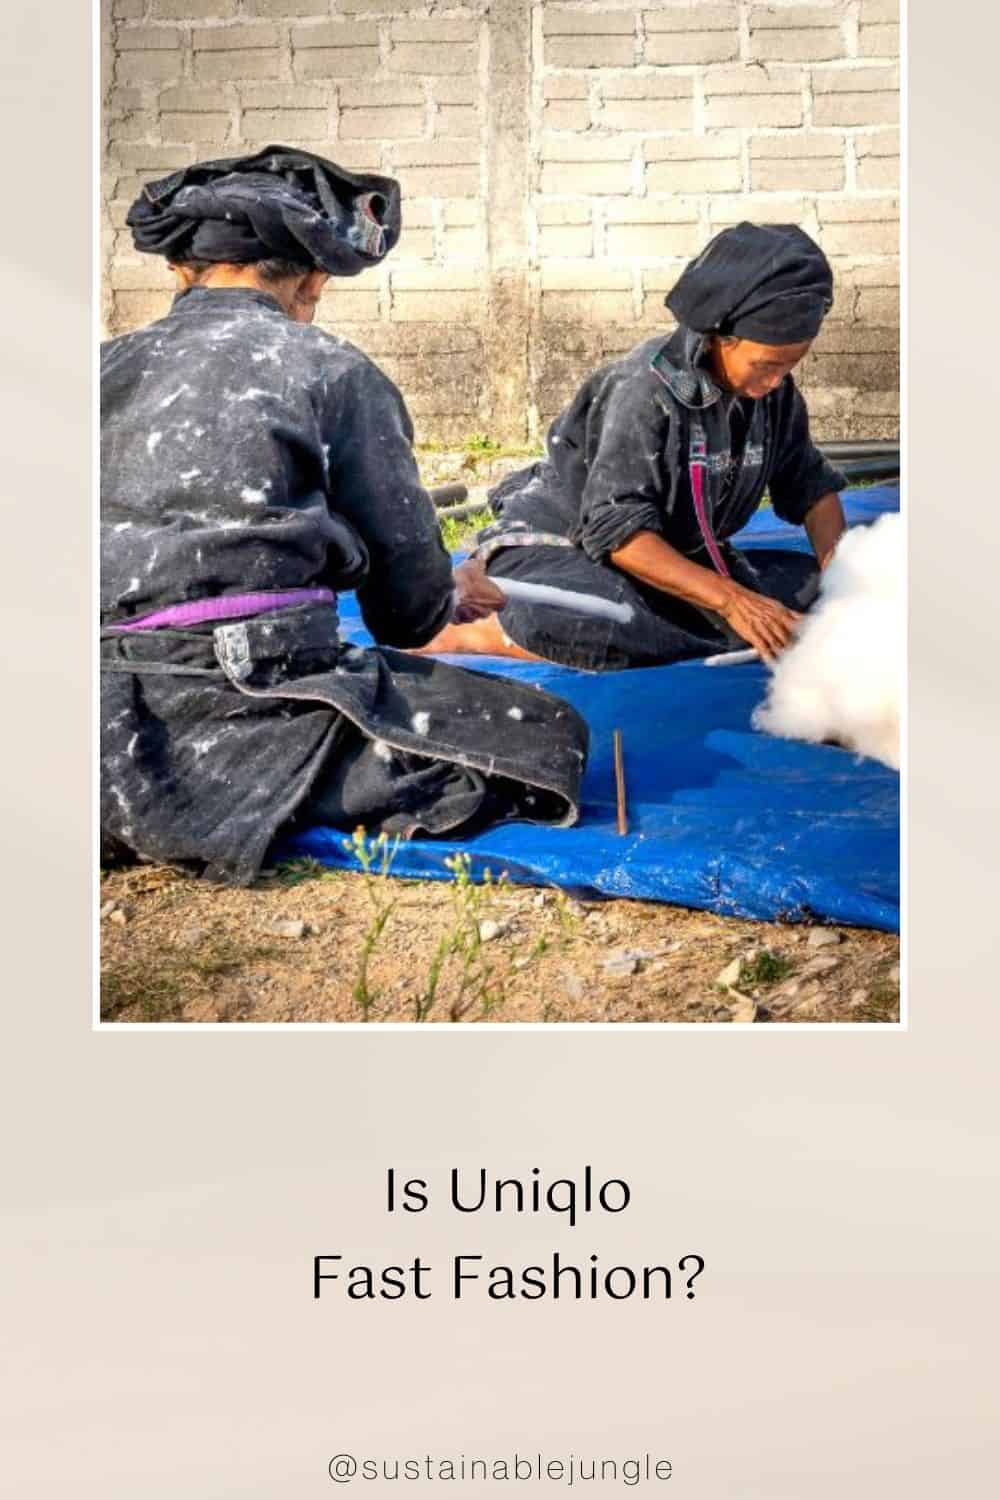 Is Uniqlo Fast Fashion? Image by quang nguyen vinh #isuniqlofastfashion #isuniqloethical #uniqlosustainability #whatisuniqlo #isuniqlosustainable #sustainablejungle